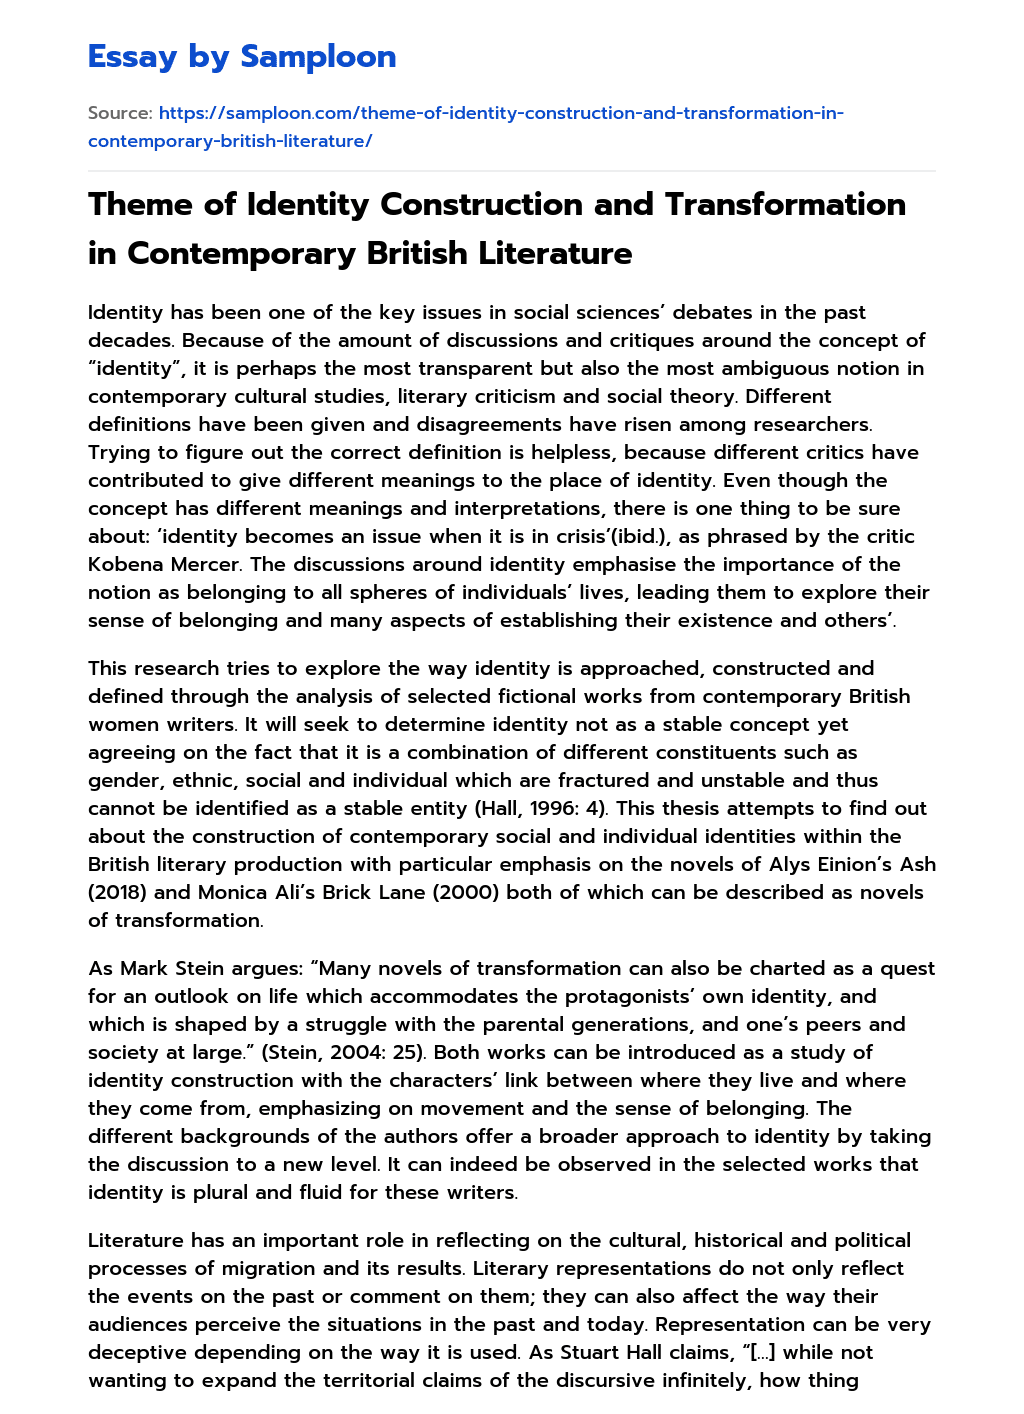 Theme of Identity Construction and Transformation in Contemporary British Literature Argumentative Essay essay